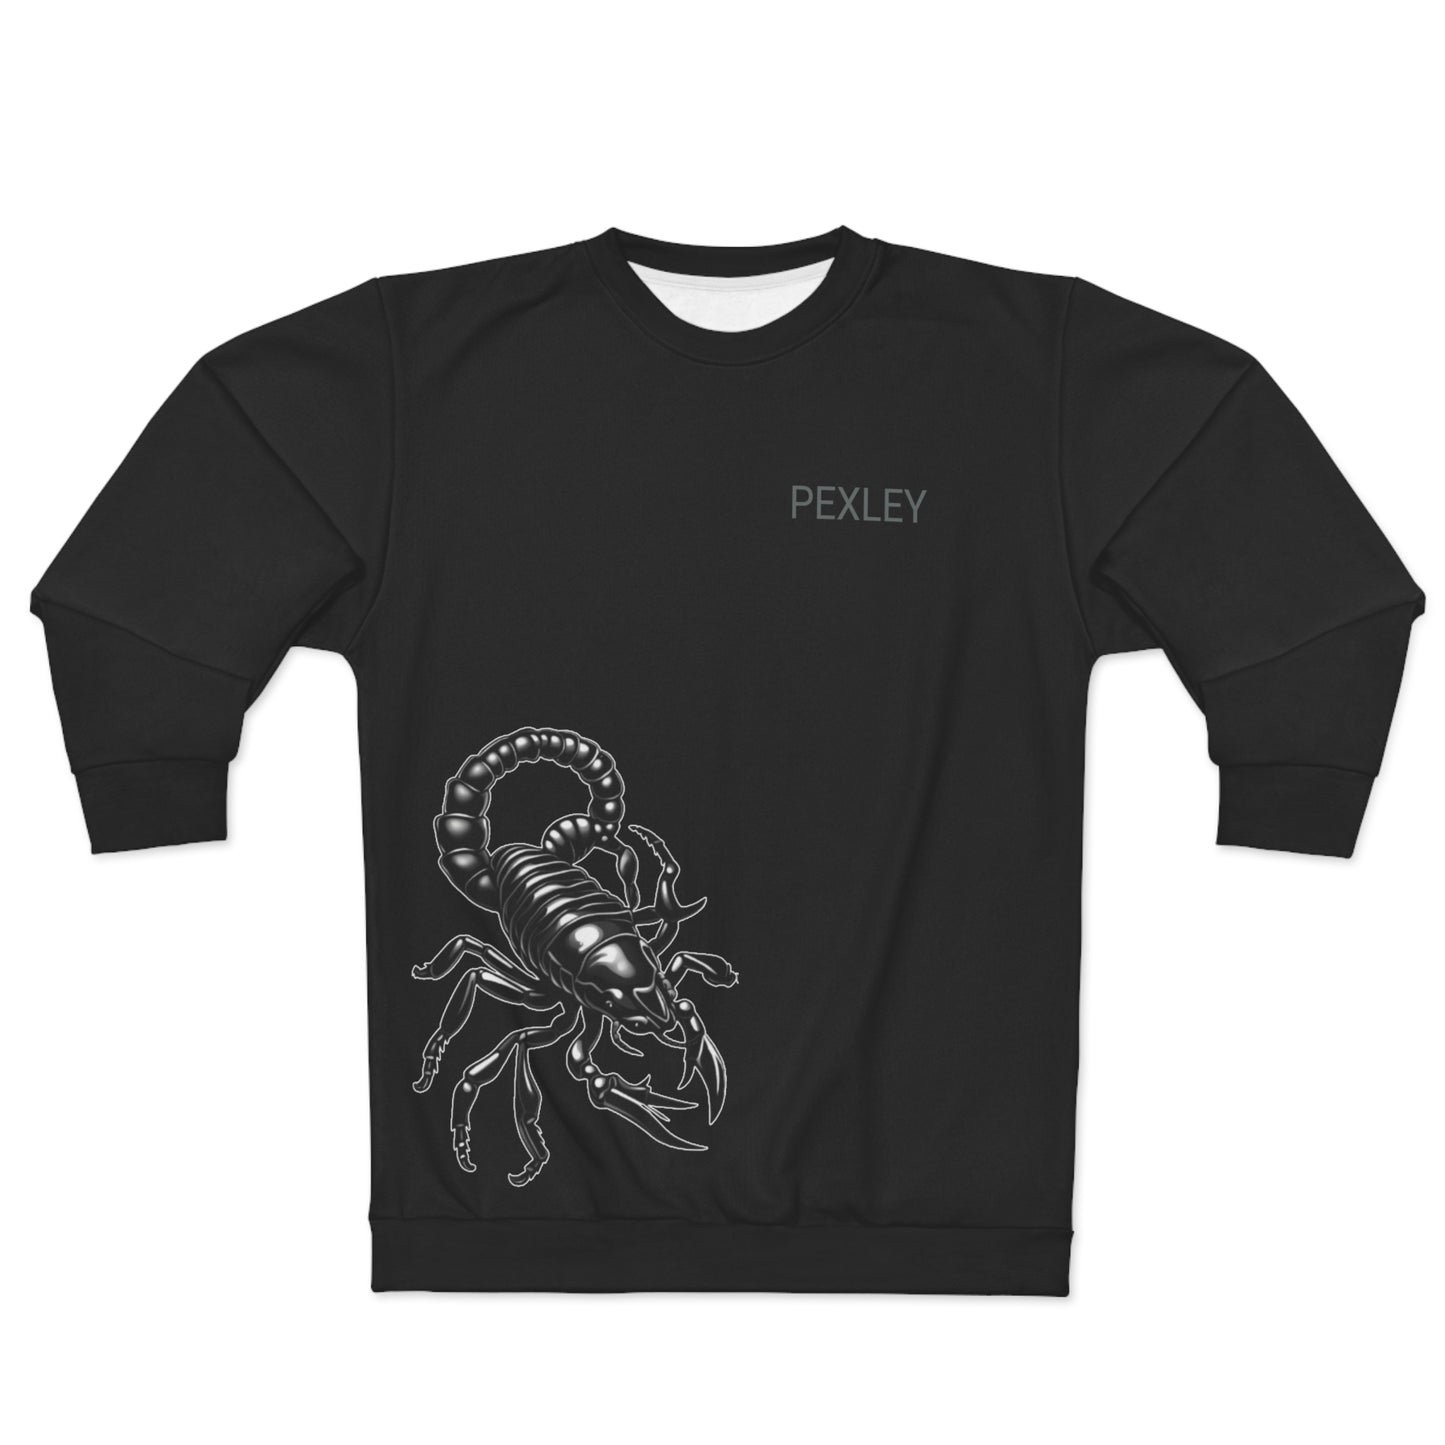 PEXLEY Scorpion Sweater